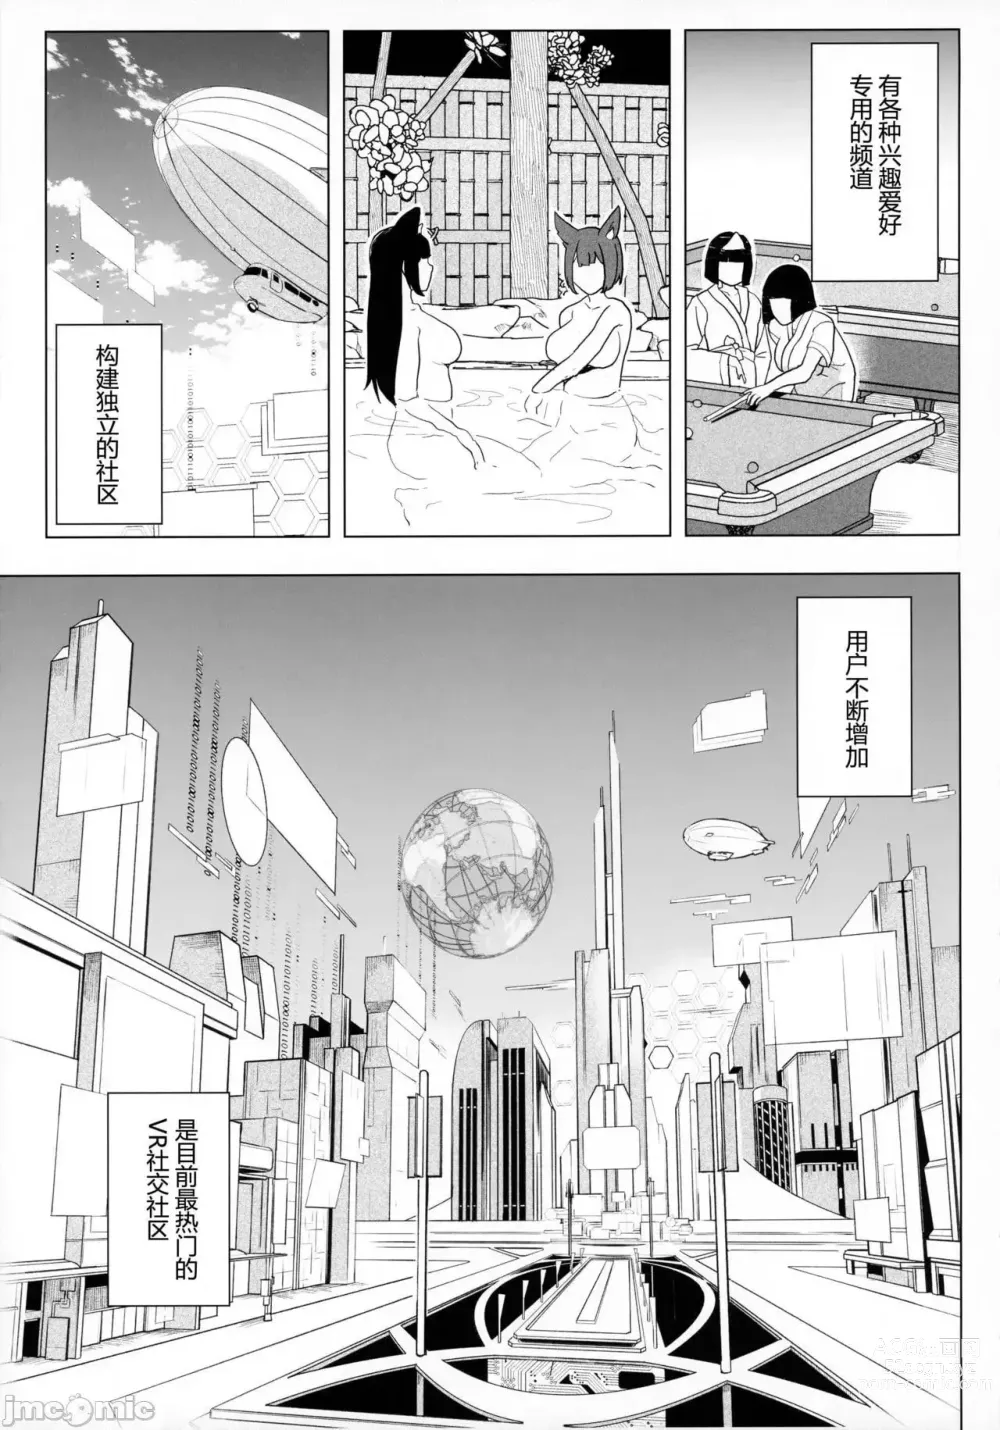 Page 3 of doujinshi 電脳姦姫 仮想空間で堕ちる少